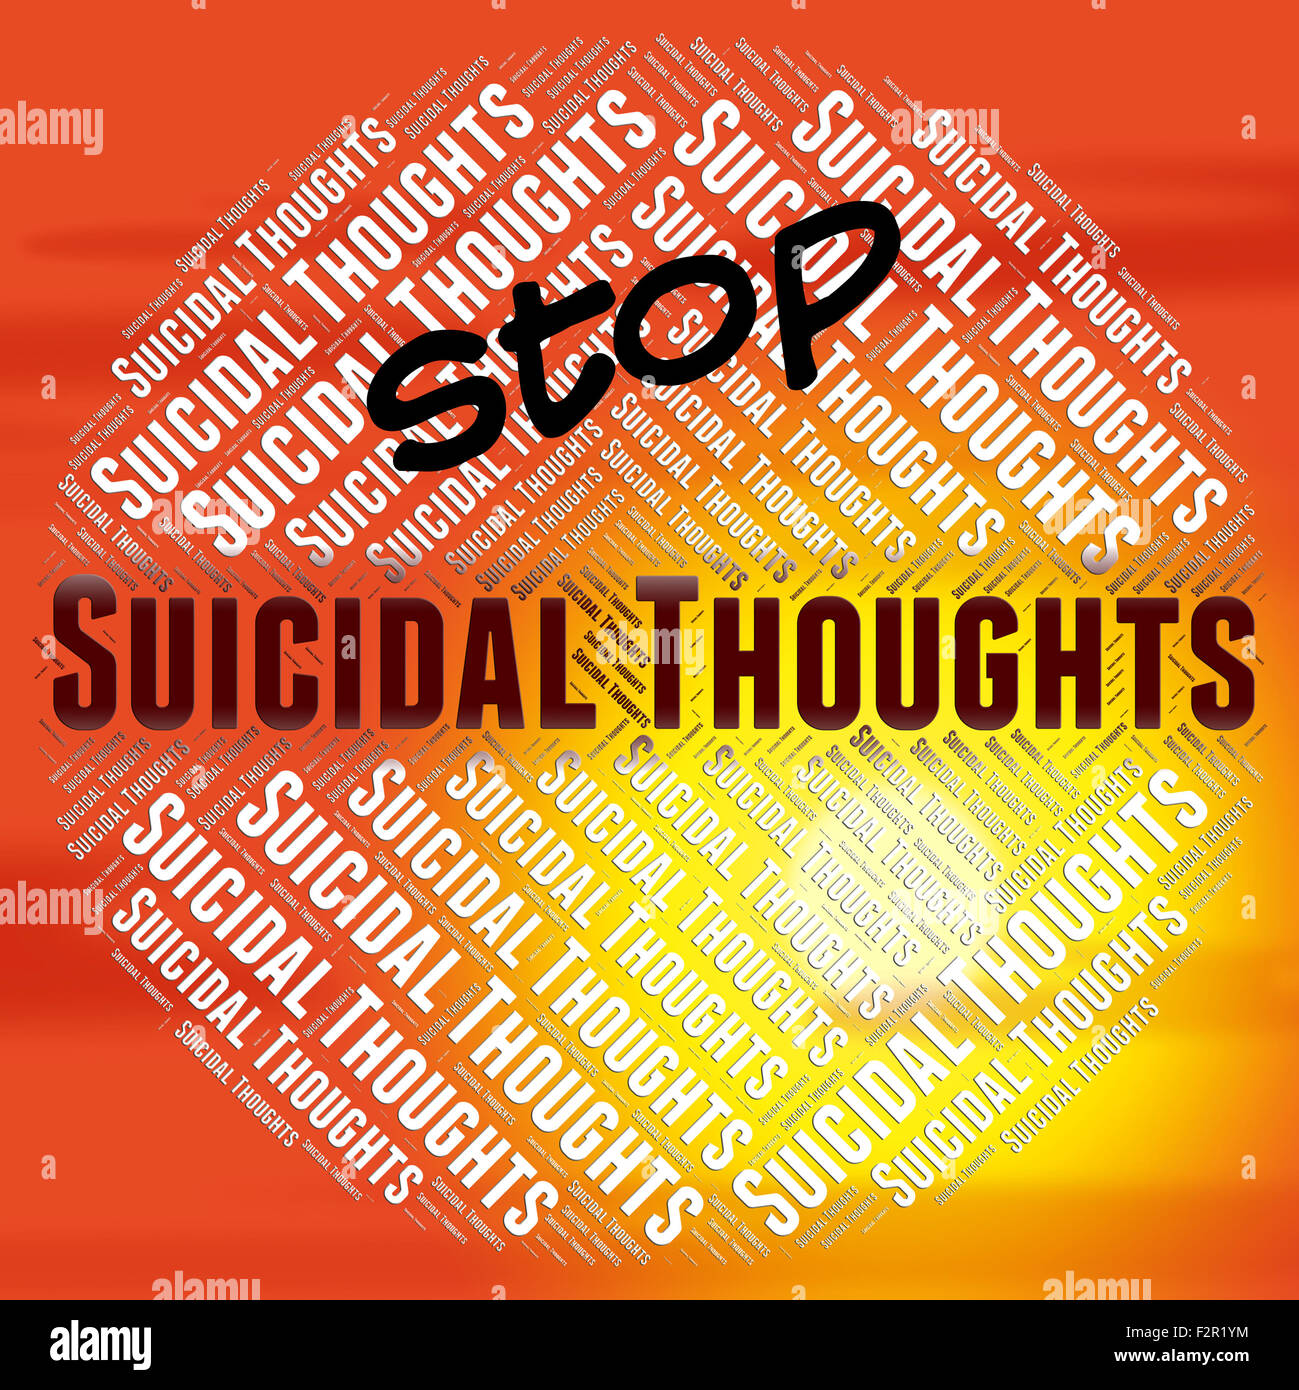 Selbstmordgedanken Angabe Selbstmord Krise und denken zu stoppen Stockfoto